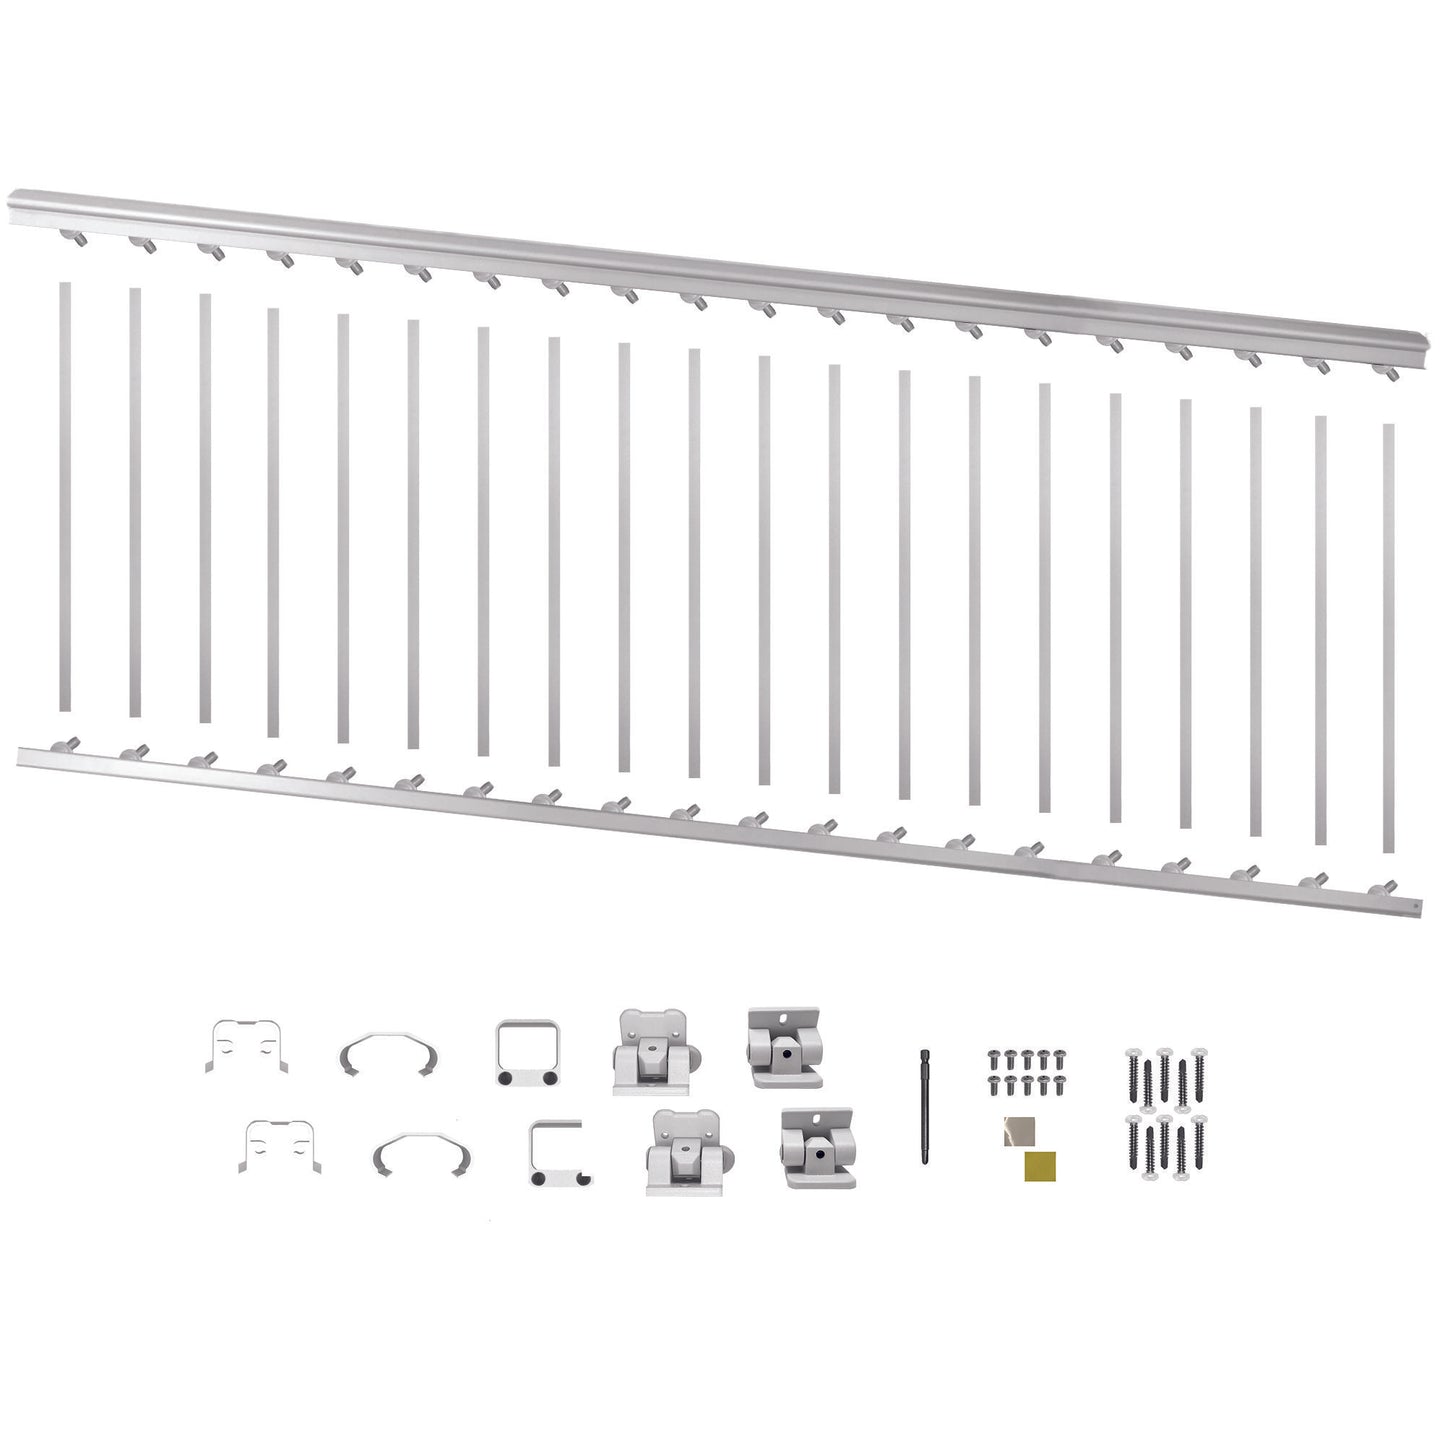 8' Long x 36" High White Aluminum Stair Railing Kit